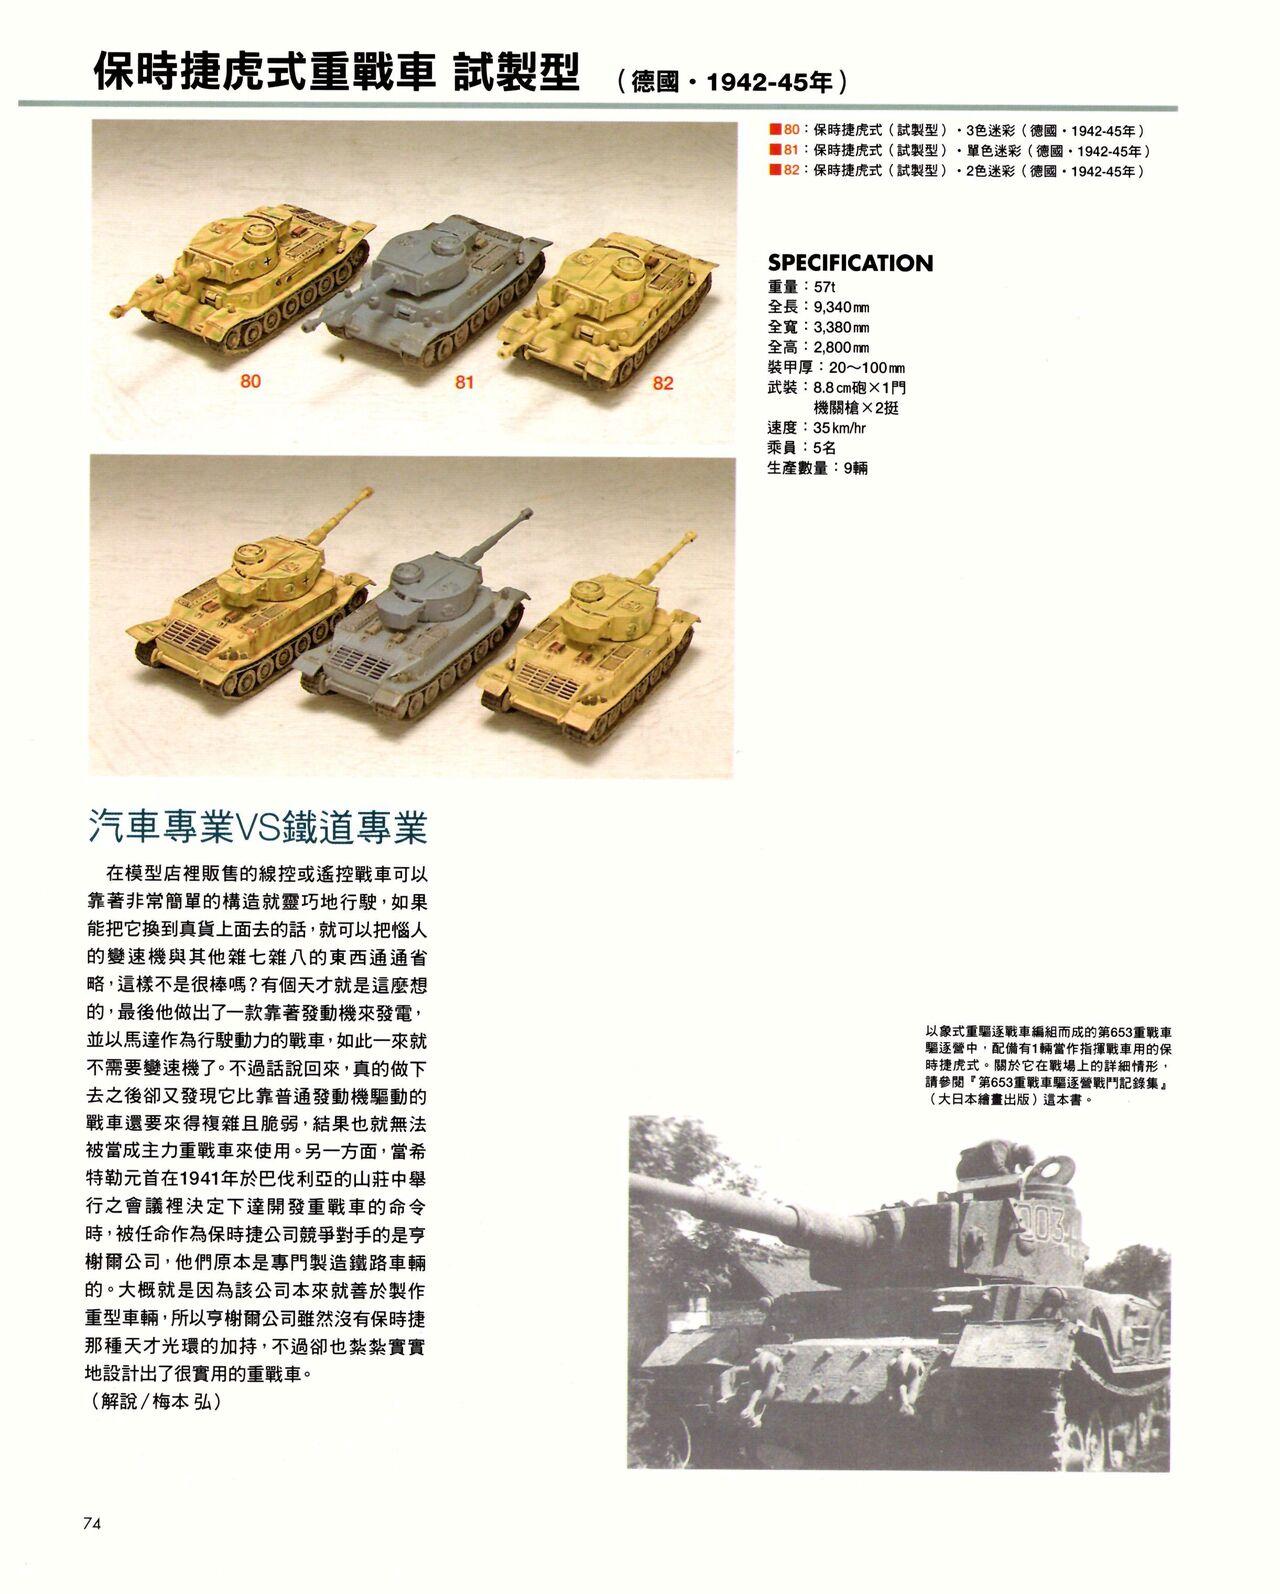 世界戰車博物館圖鑑(2009台版)  PANZERTALES WORLD TANK MUSEUM illustrated (chinese) 73